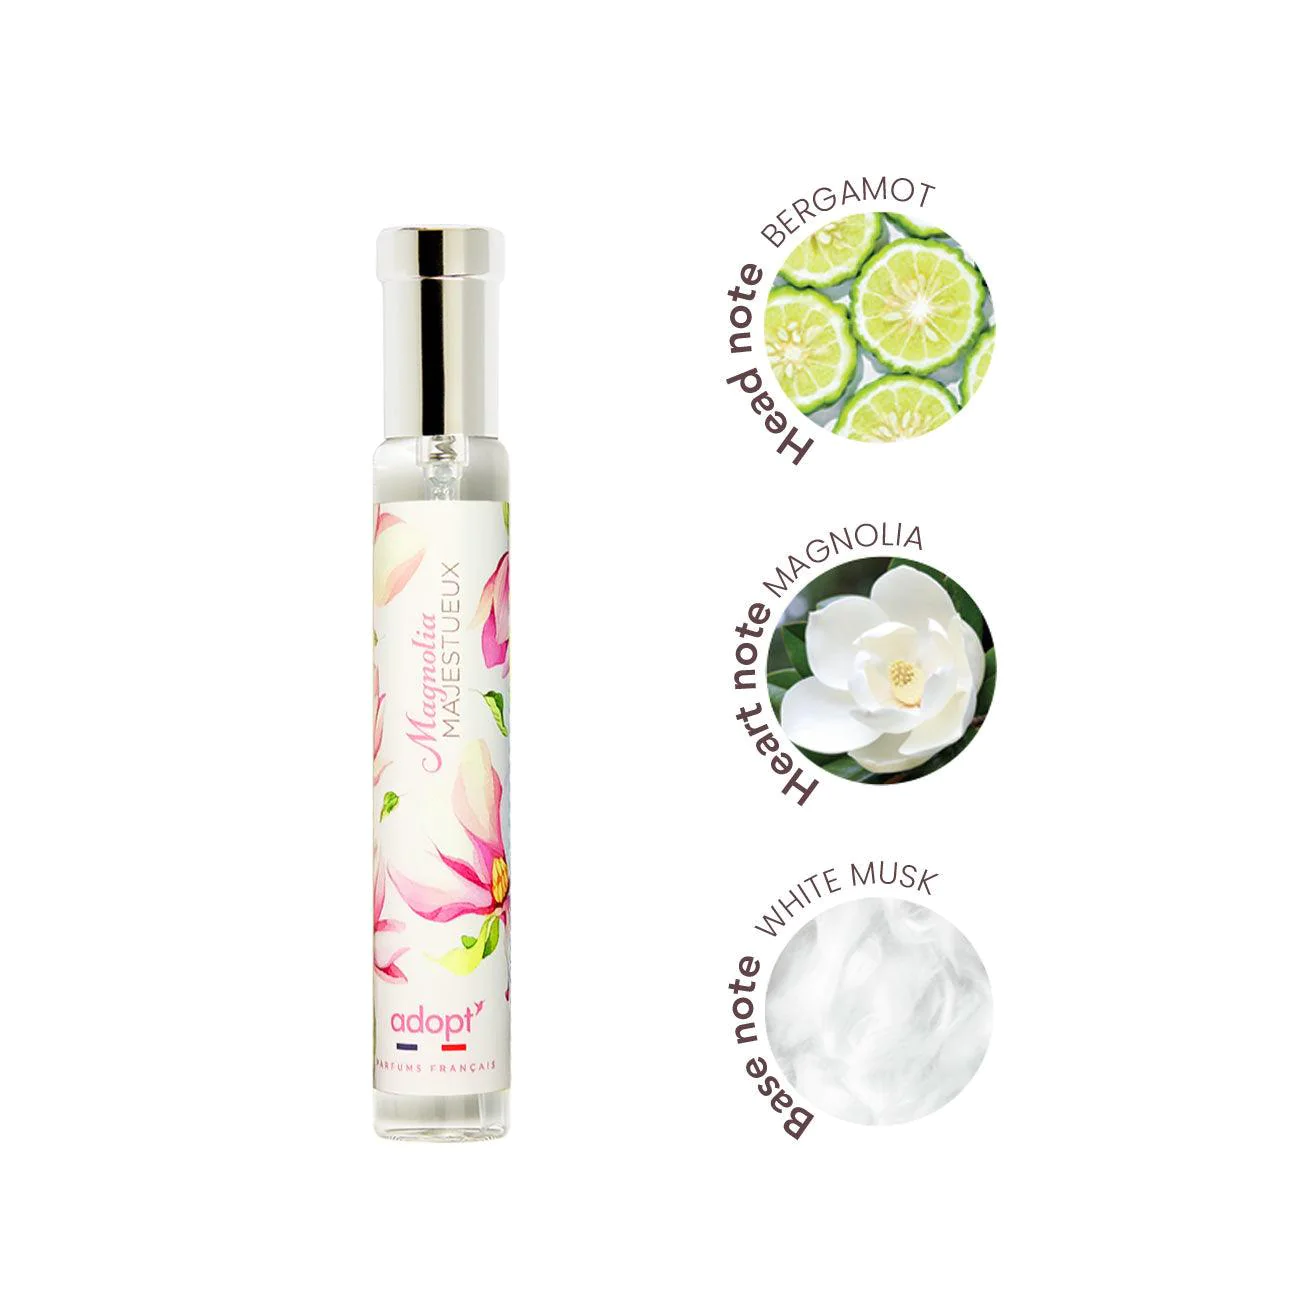 adopt-magnolia-majestueux-eau-de-parfum-skin-society-shop-address-country-2